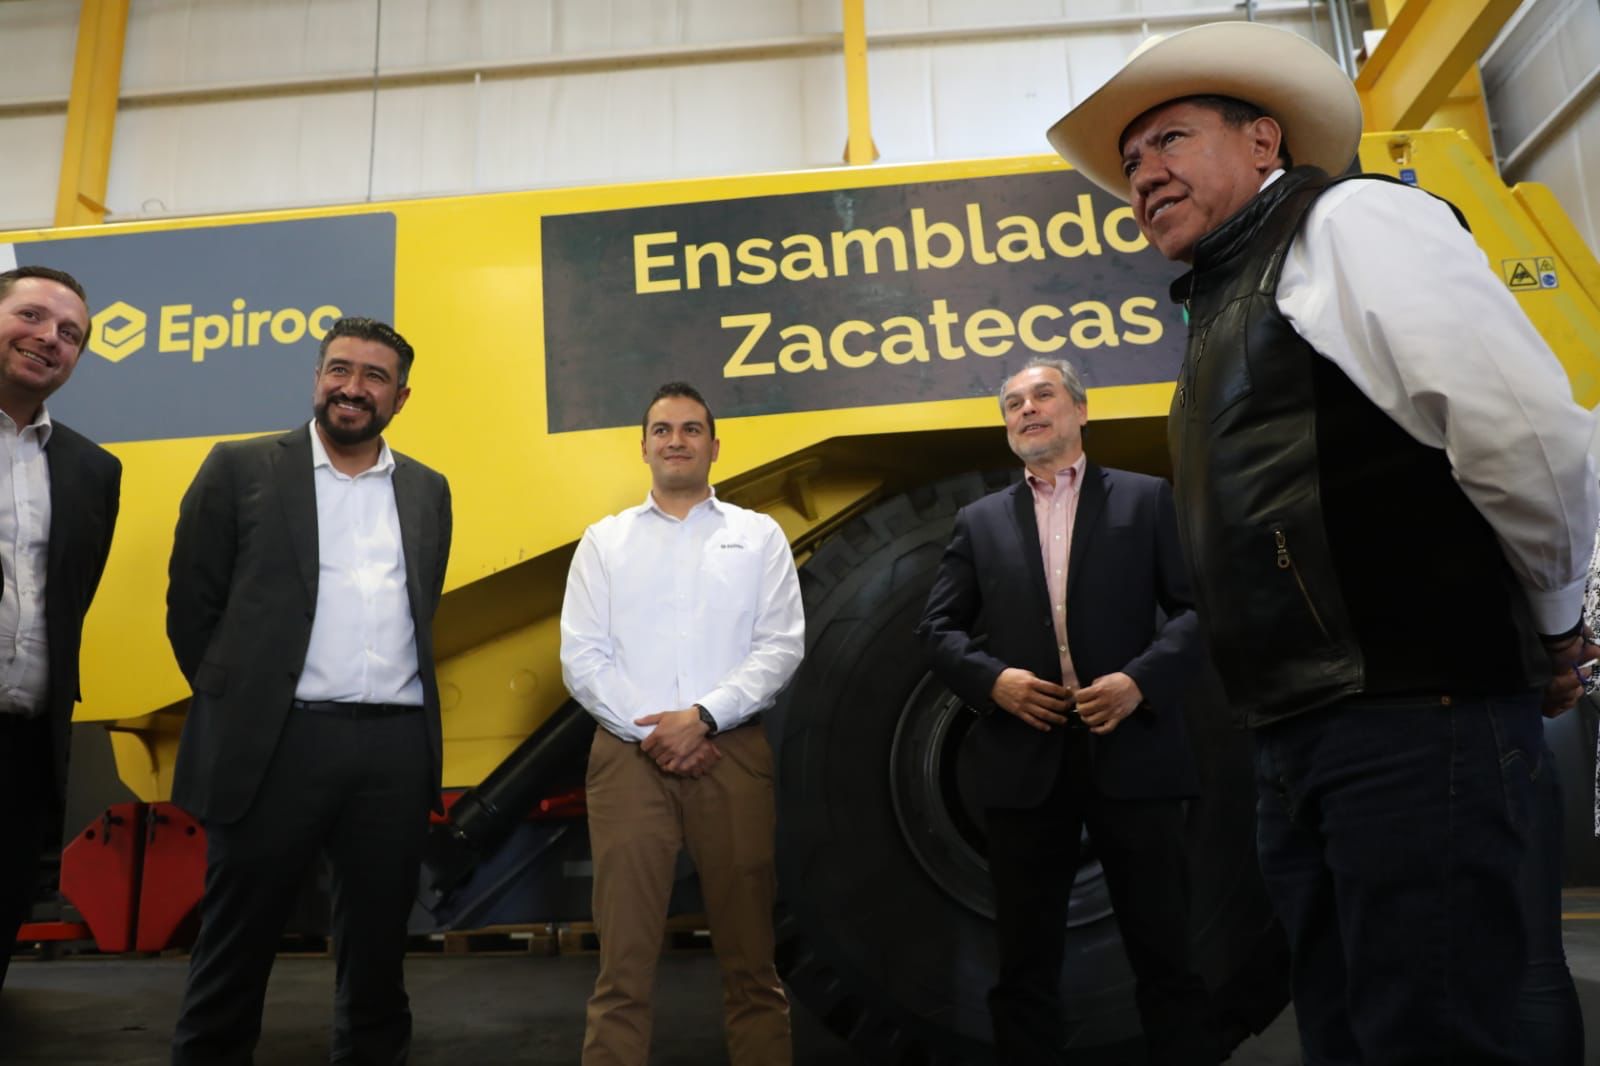 Ensambla Zacatecas primer vehículo de minería de toda América Latina; reconoce David Monreal a empresa Epiroc